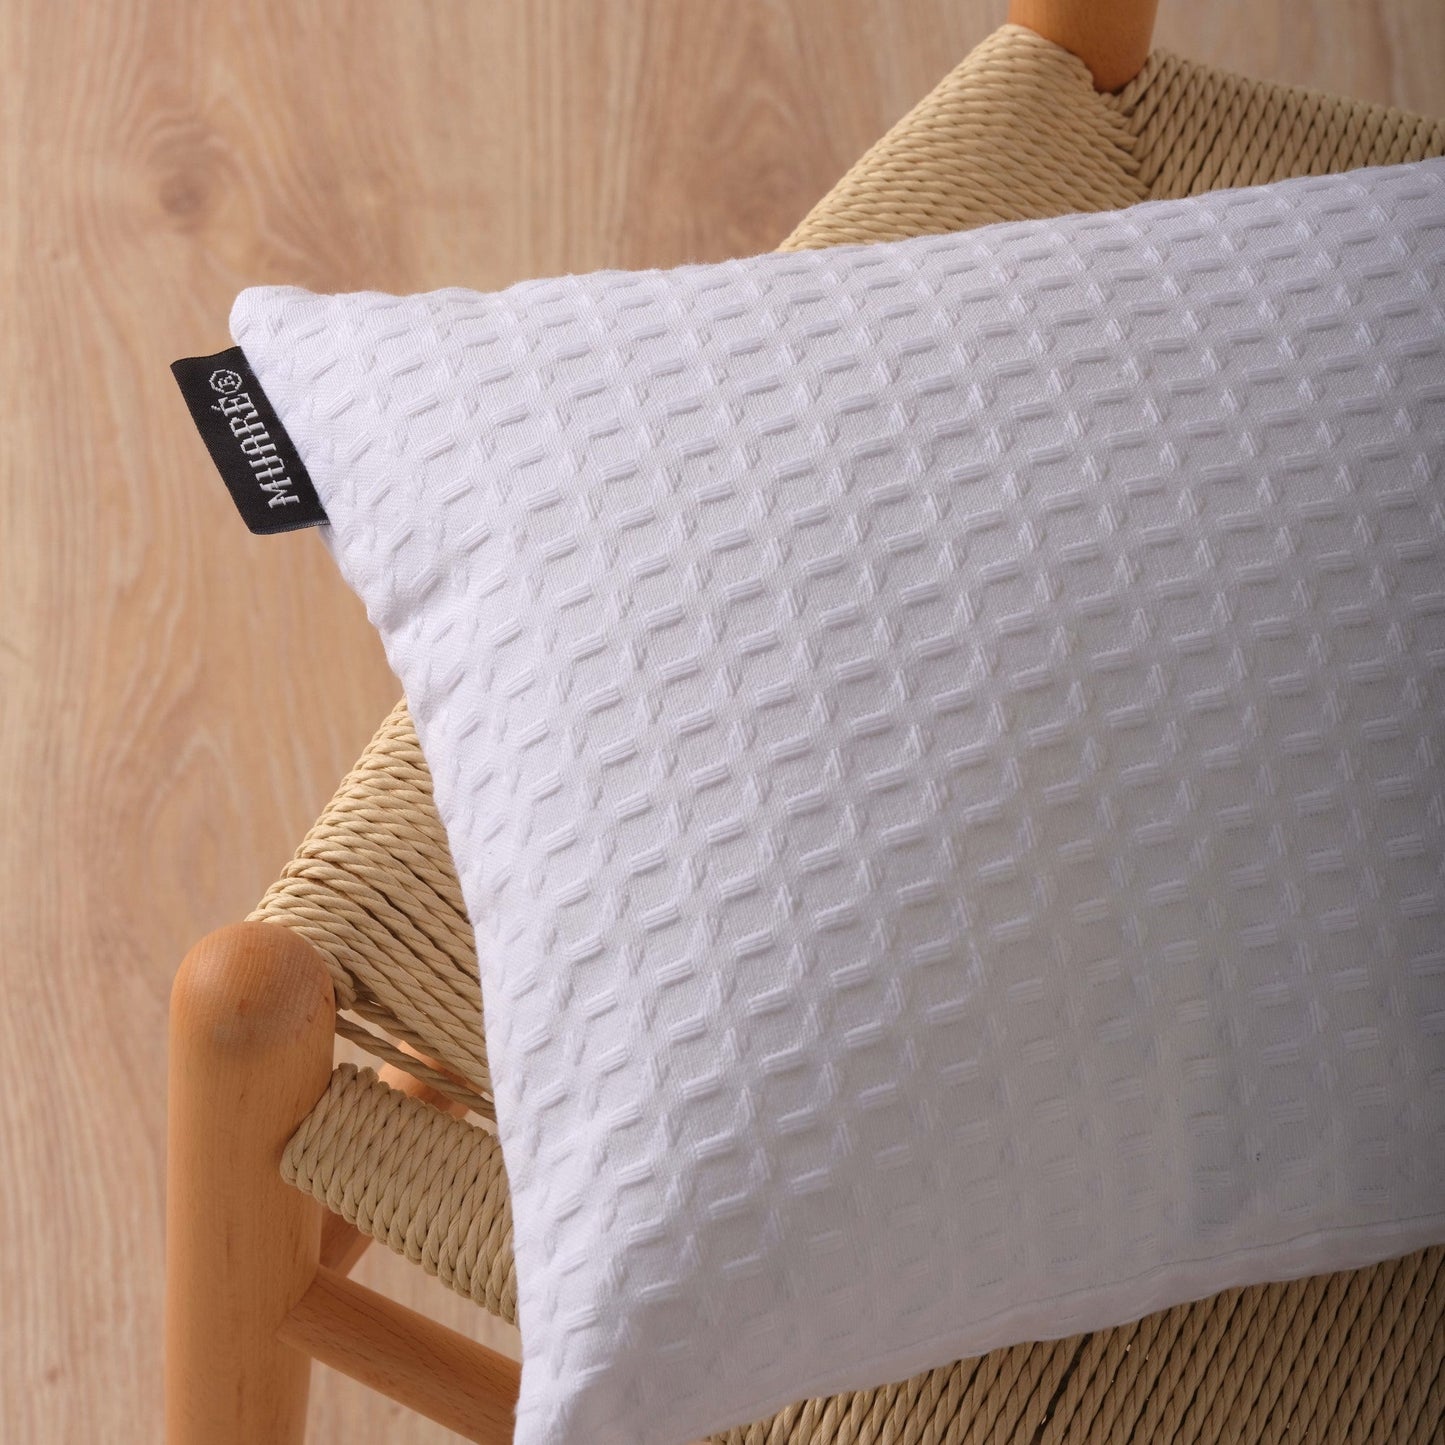 White Waffle cushion cover 50x50 cm